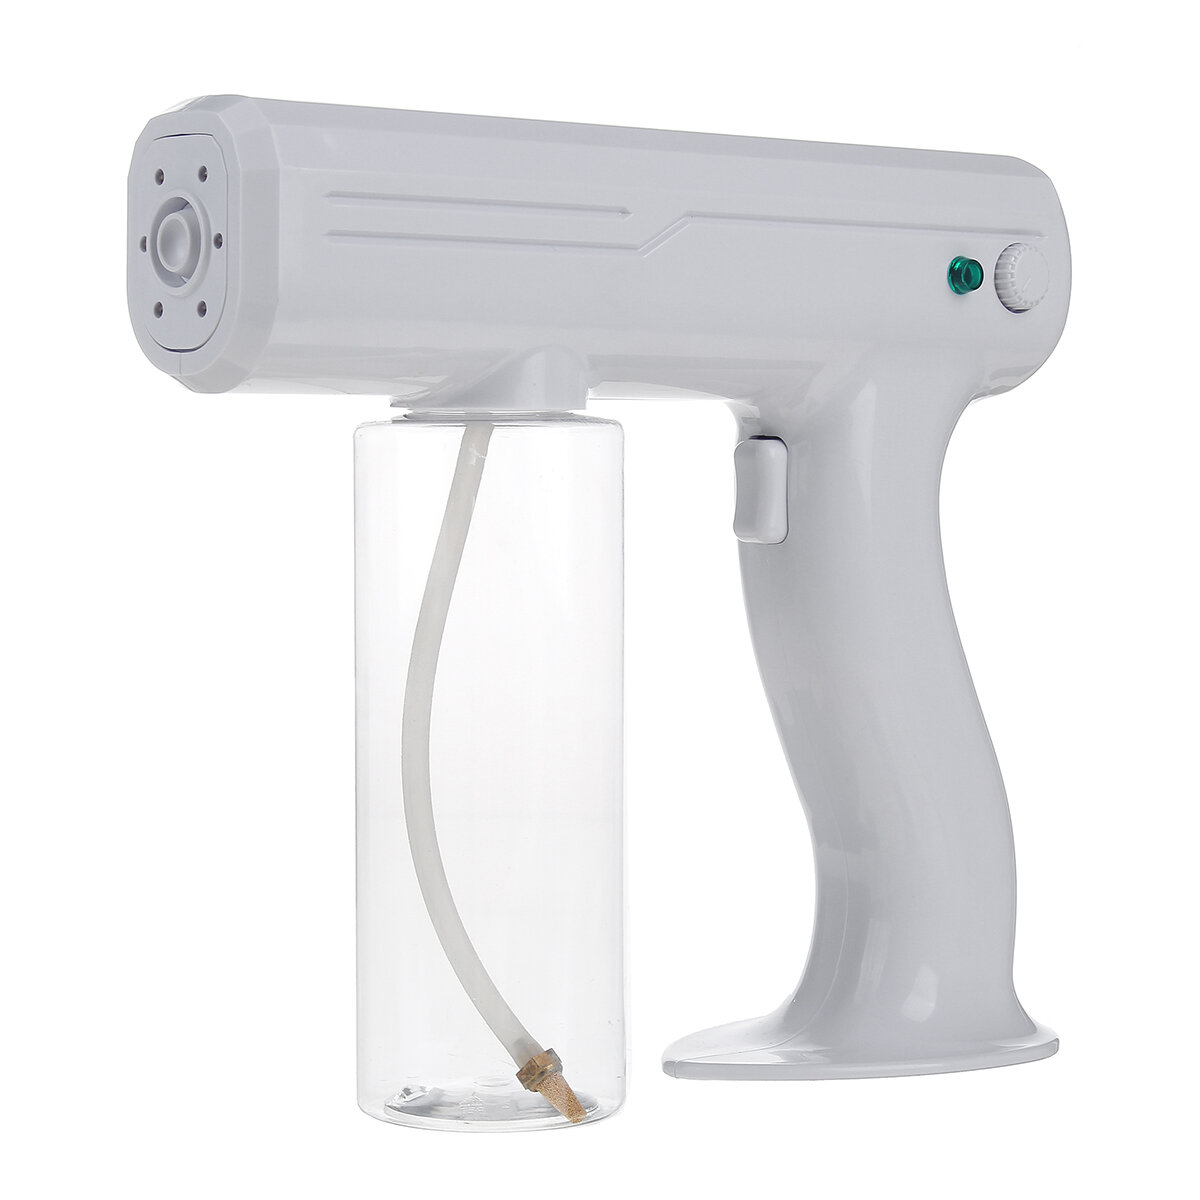 

Handheld Blue Light Nano Sprayer Disinfection Spray Tool